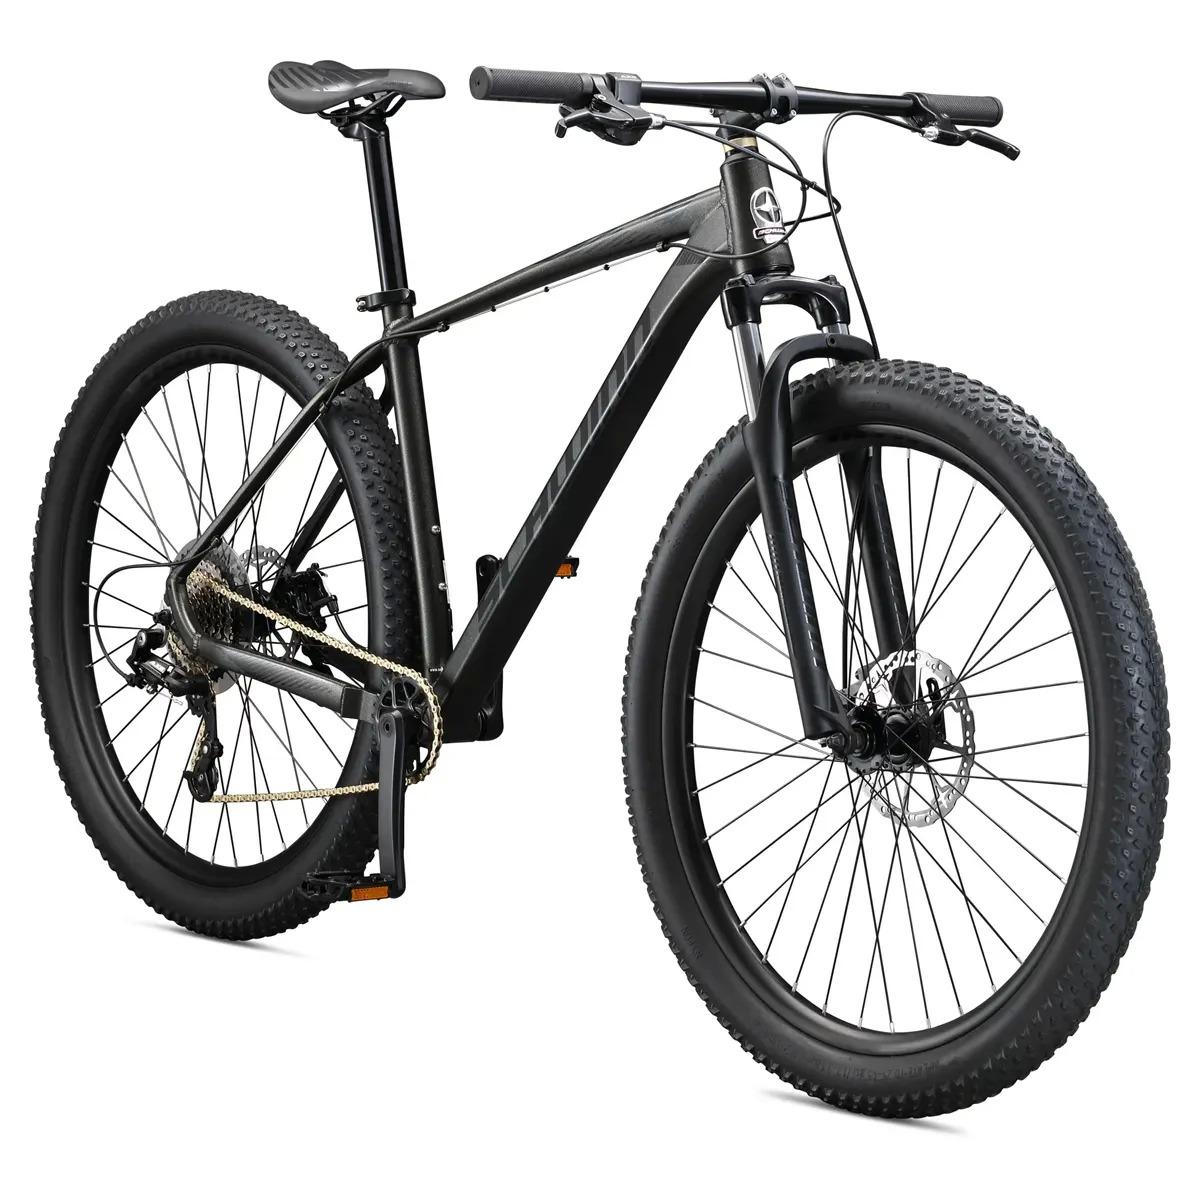 Schwinn Axum Mountain Bike for $228 Shipped